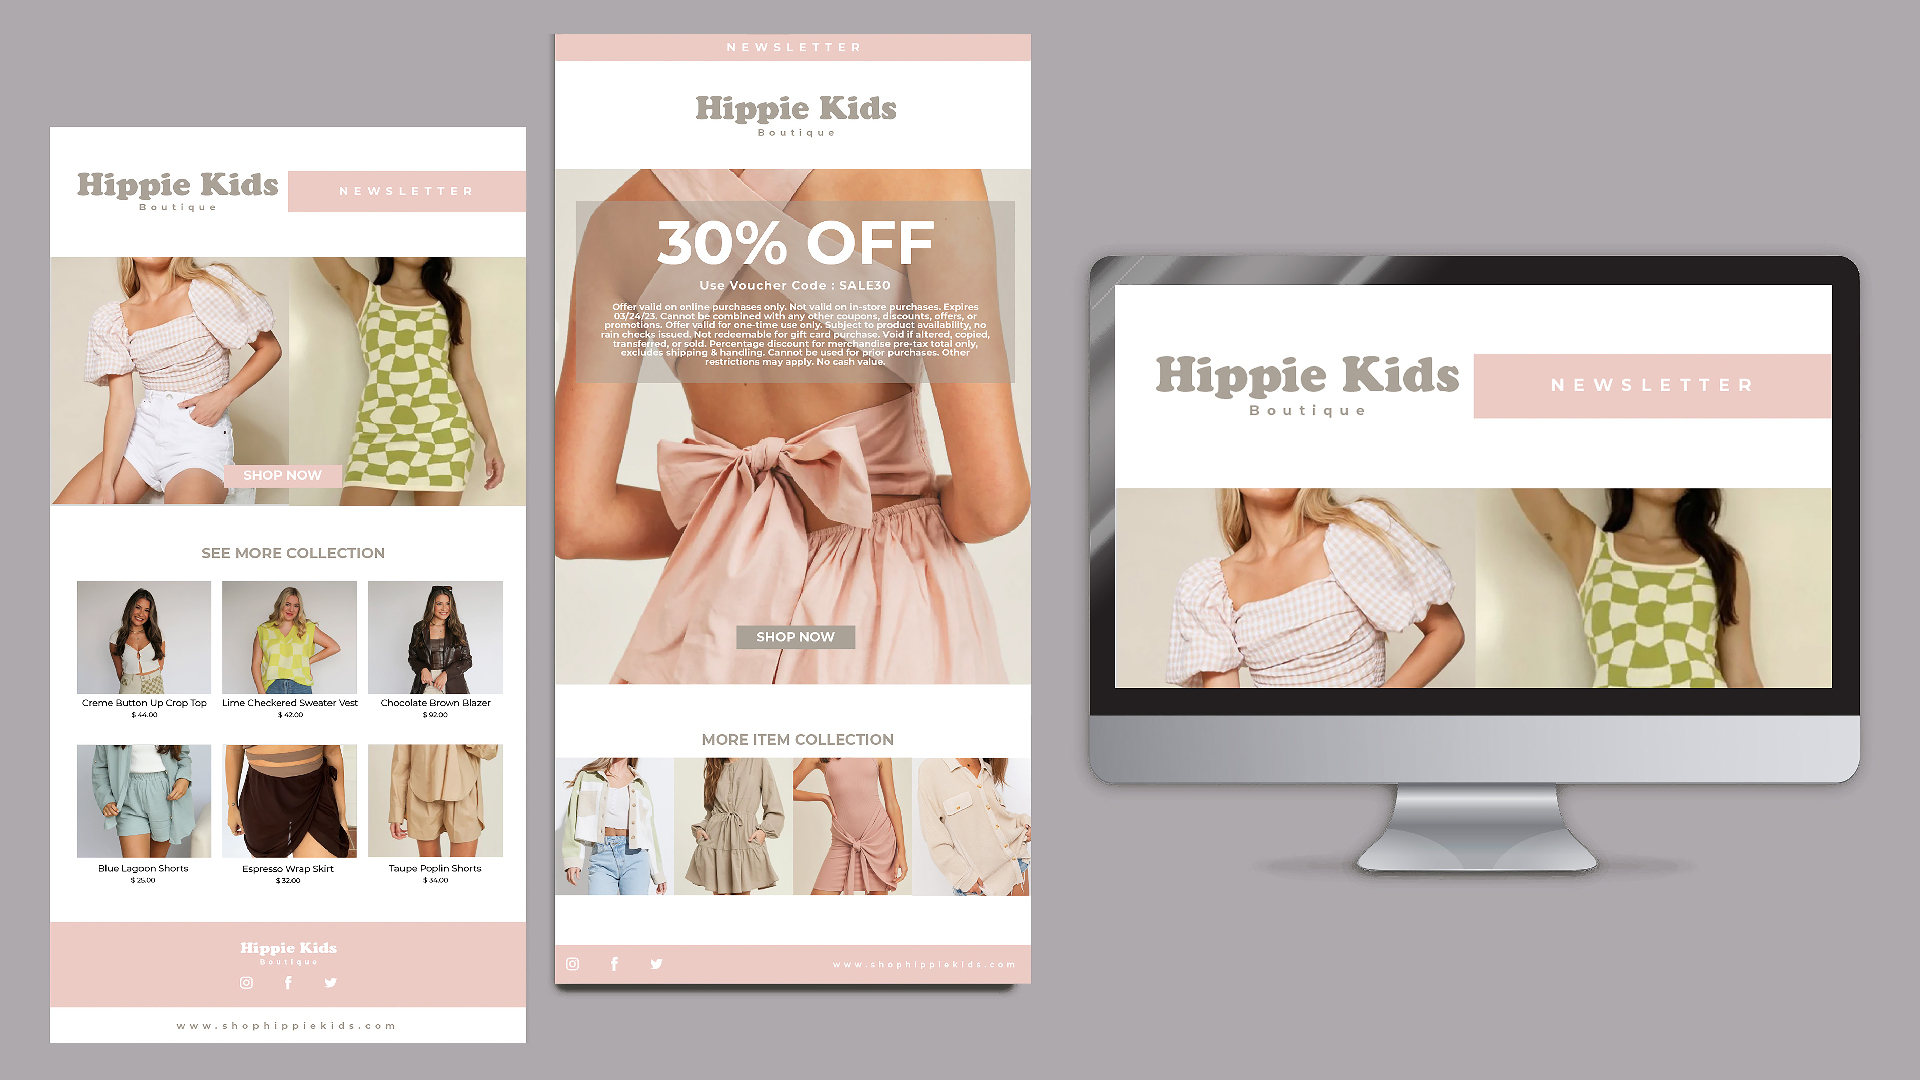 “Hippie Kids Boutique” / “Hippie Kids Boutique”, Email Newsletter, Adobe Illustrator, Designed for Digital Devices, 2022.